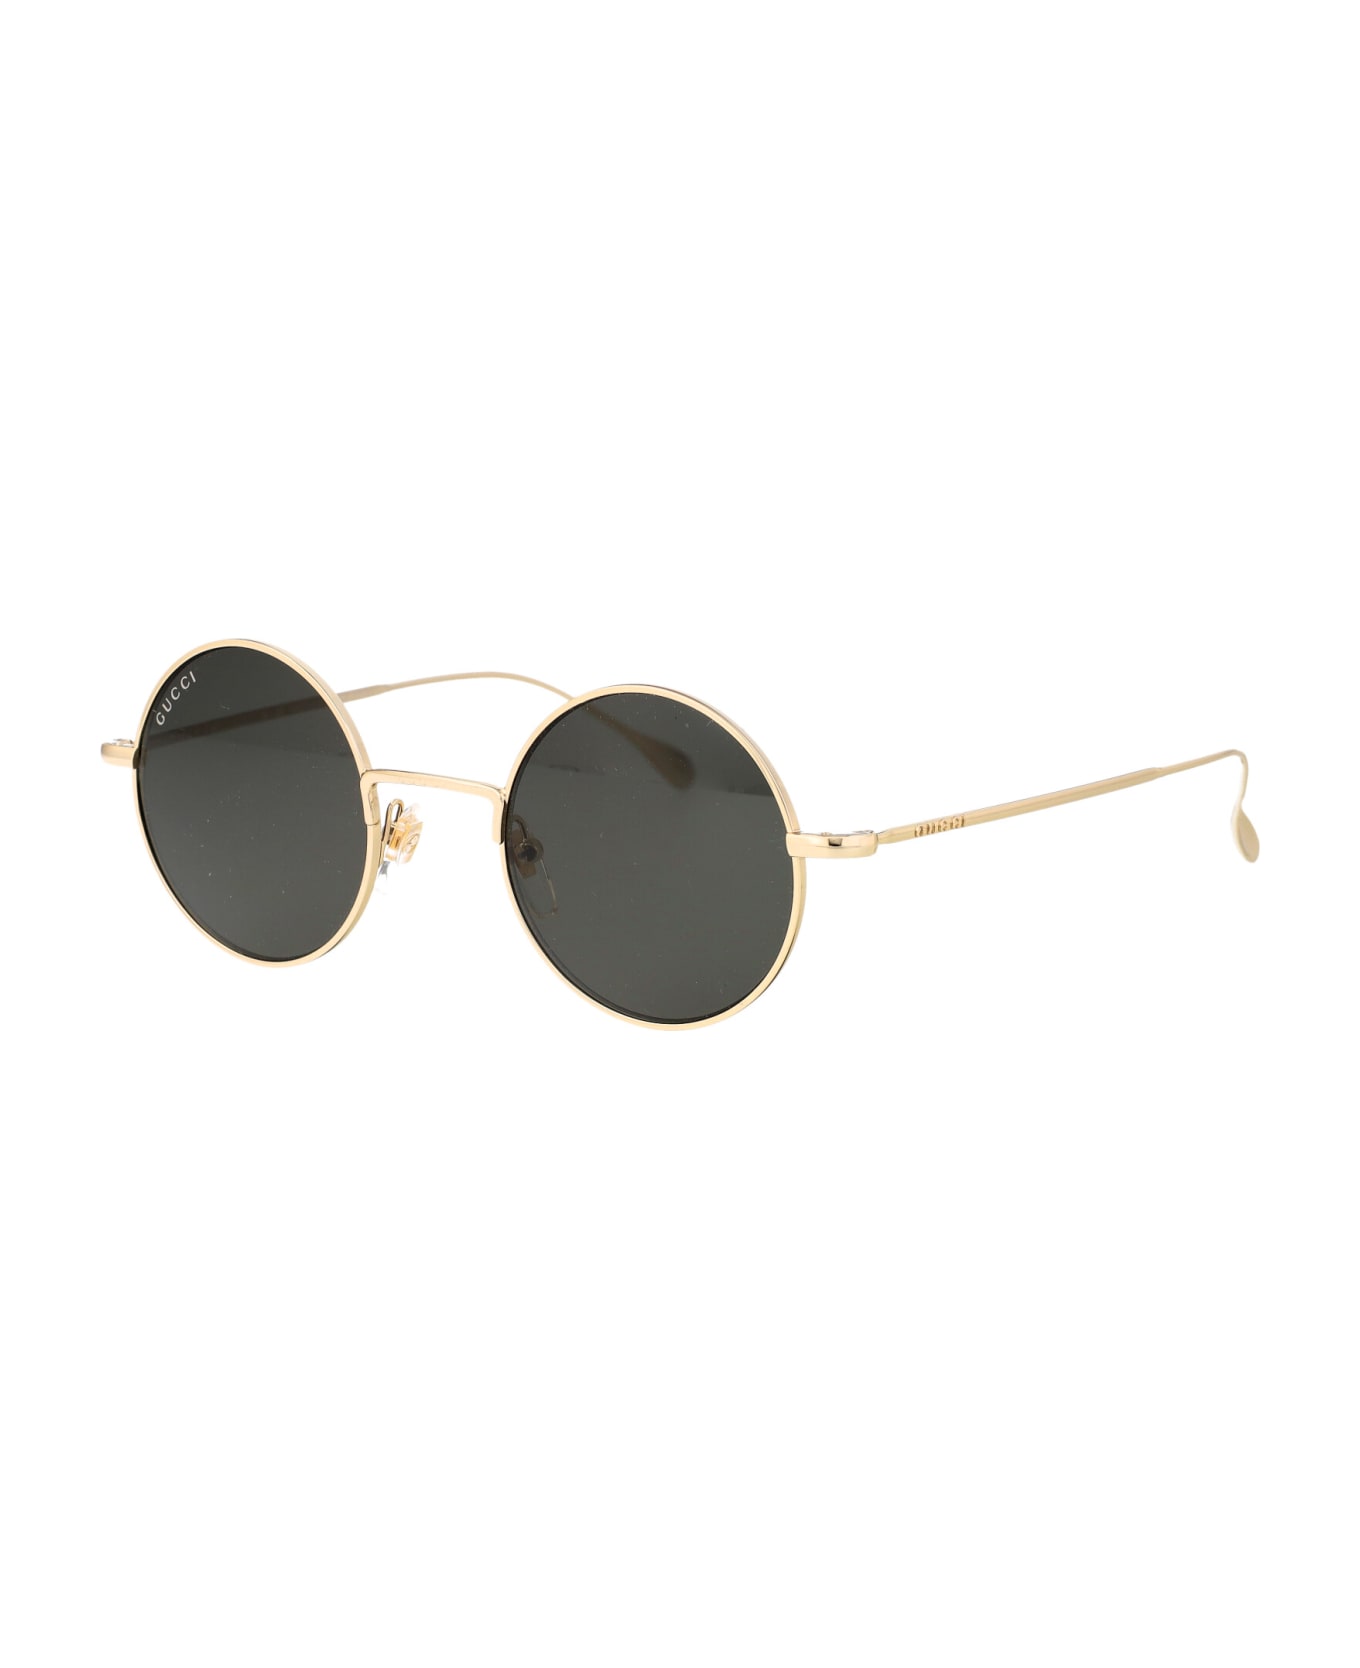 Gucci Eyewear Gg1649s Sunglasses - 007 GOLD GOLD GREY サングラス